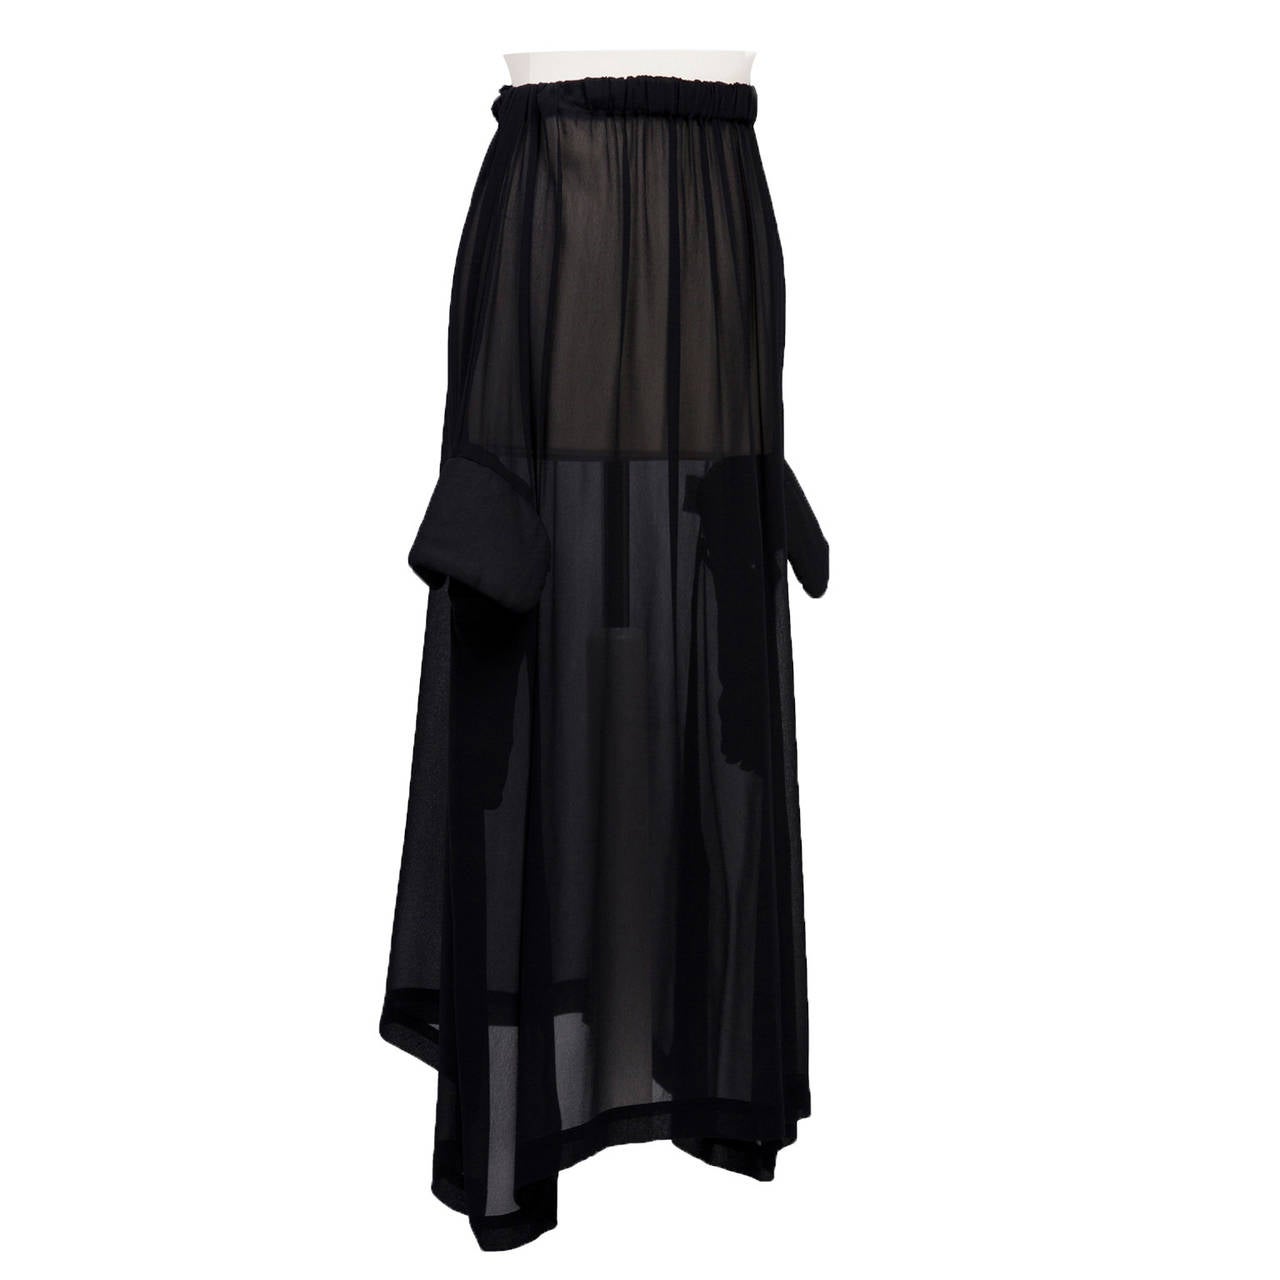 Black sheer skirt with elastic waist, padded flap pockets.